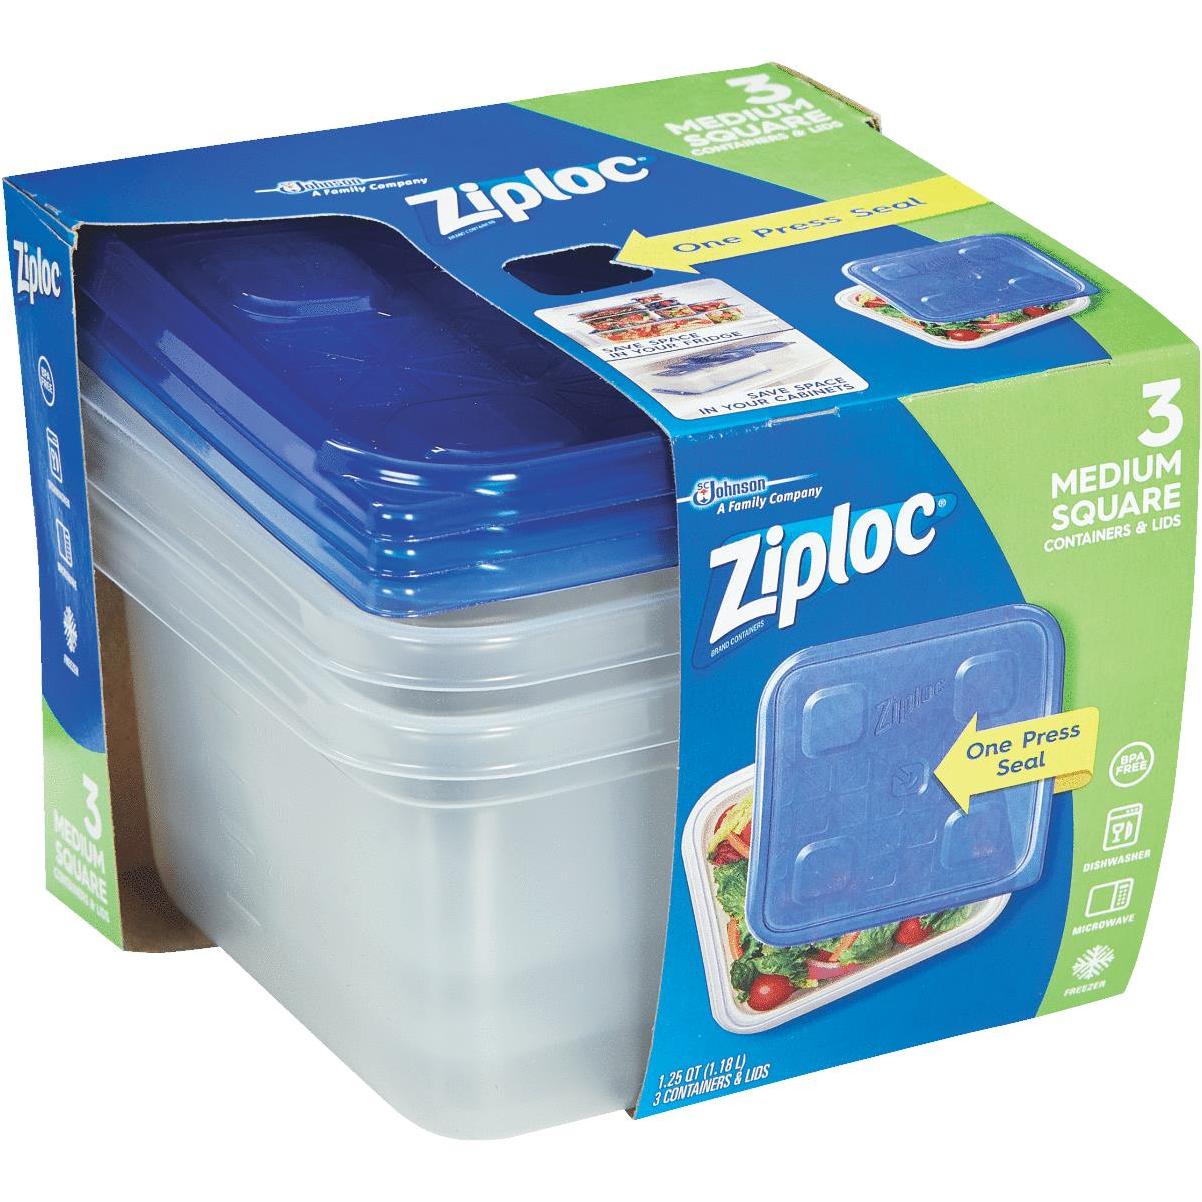 Ziploc Twist 'n Loc 1 Pt. Clear Round Food Storage Container with Lids  (3-Pack)